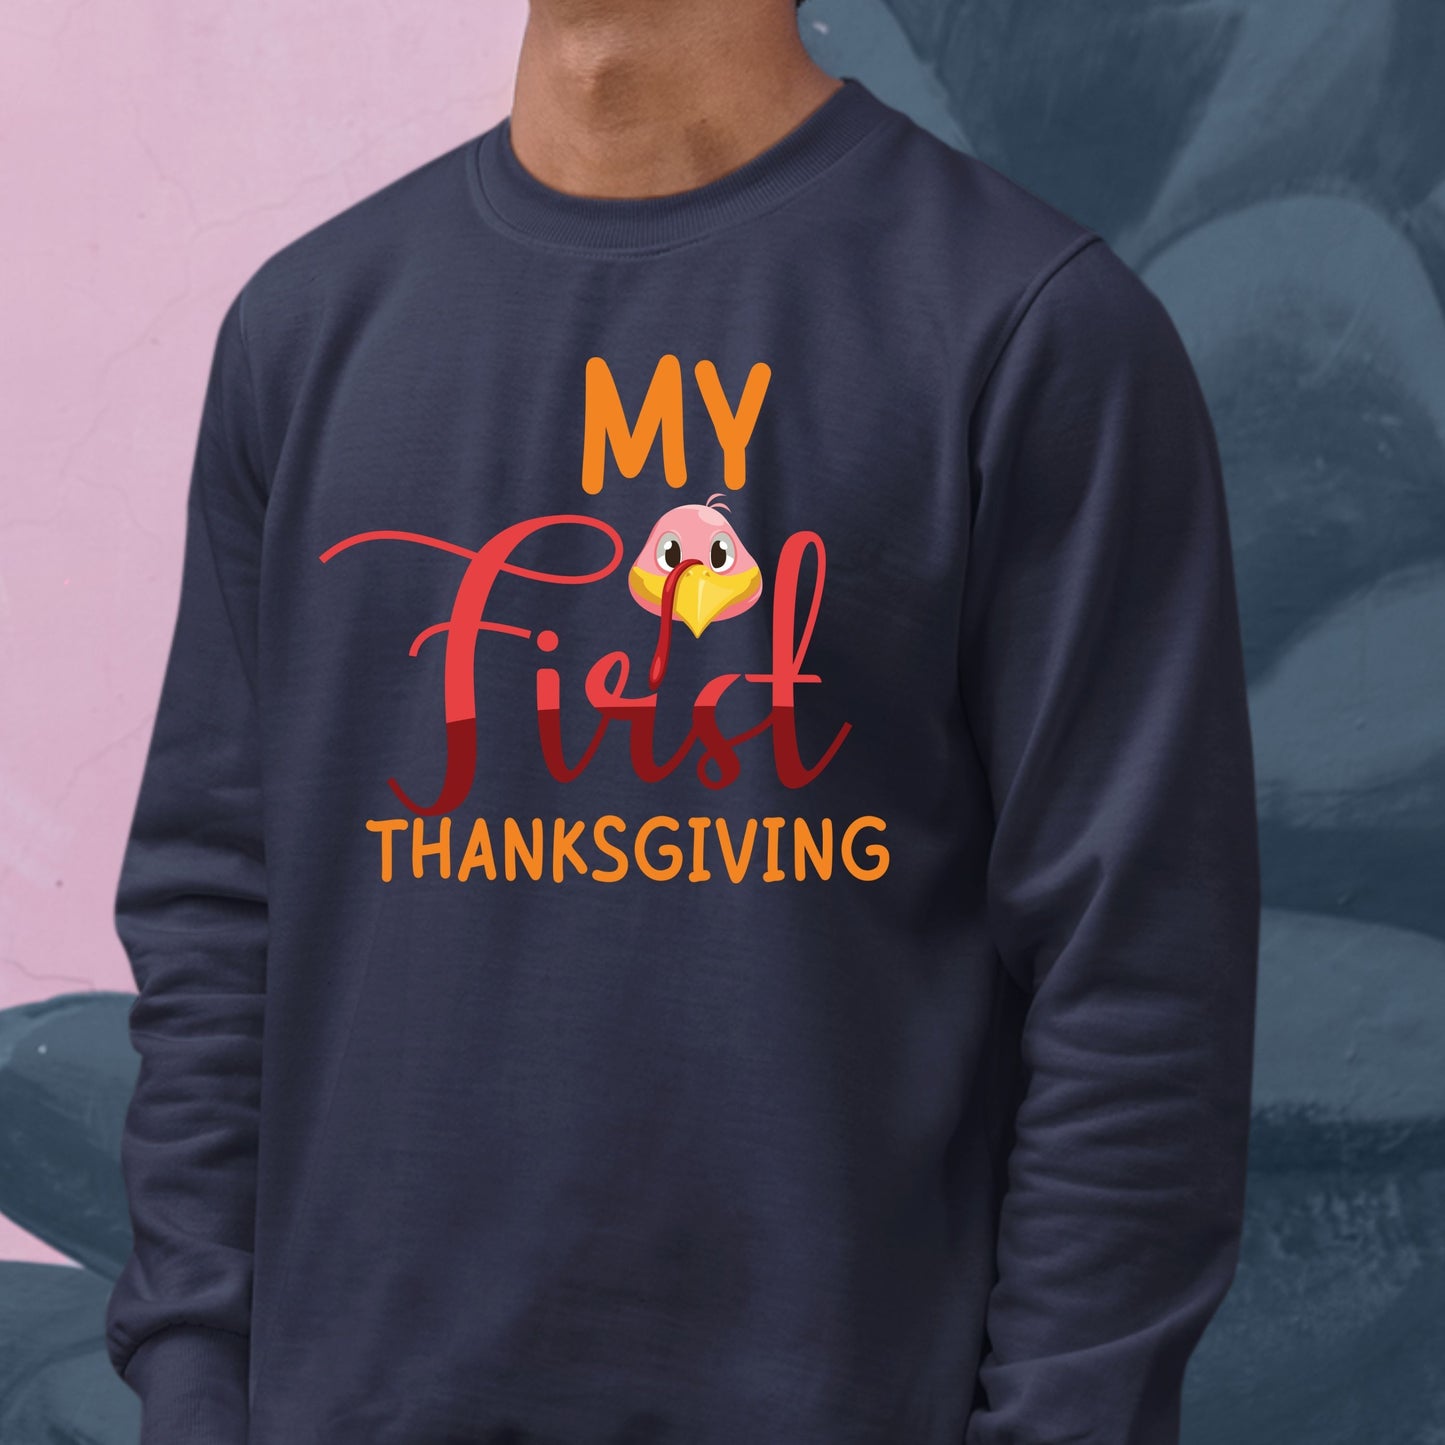 My First Thanks Giving, Thanksgiving Sweatshirt, Thanksgiving Sweater for kids, Thanksgiving Gift Ideas, Cute Thanksgiving